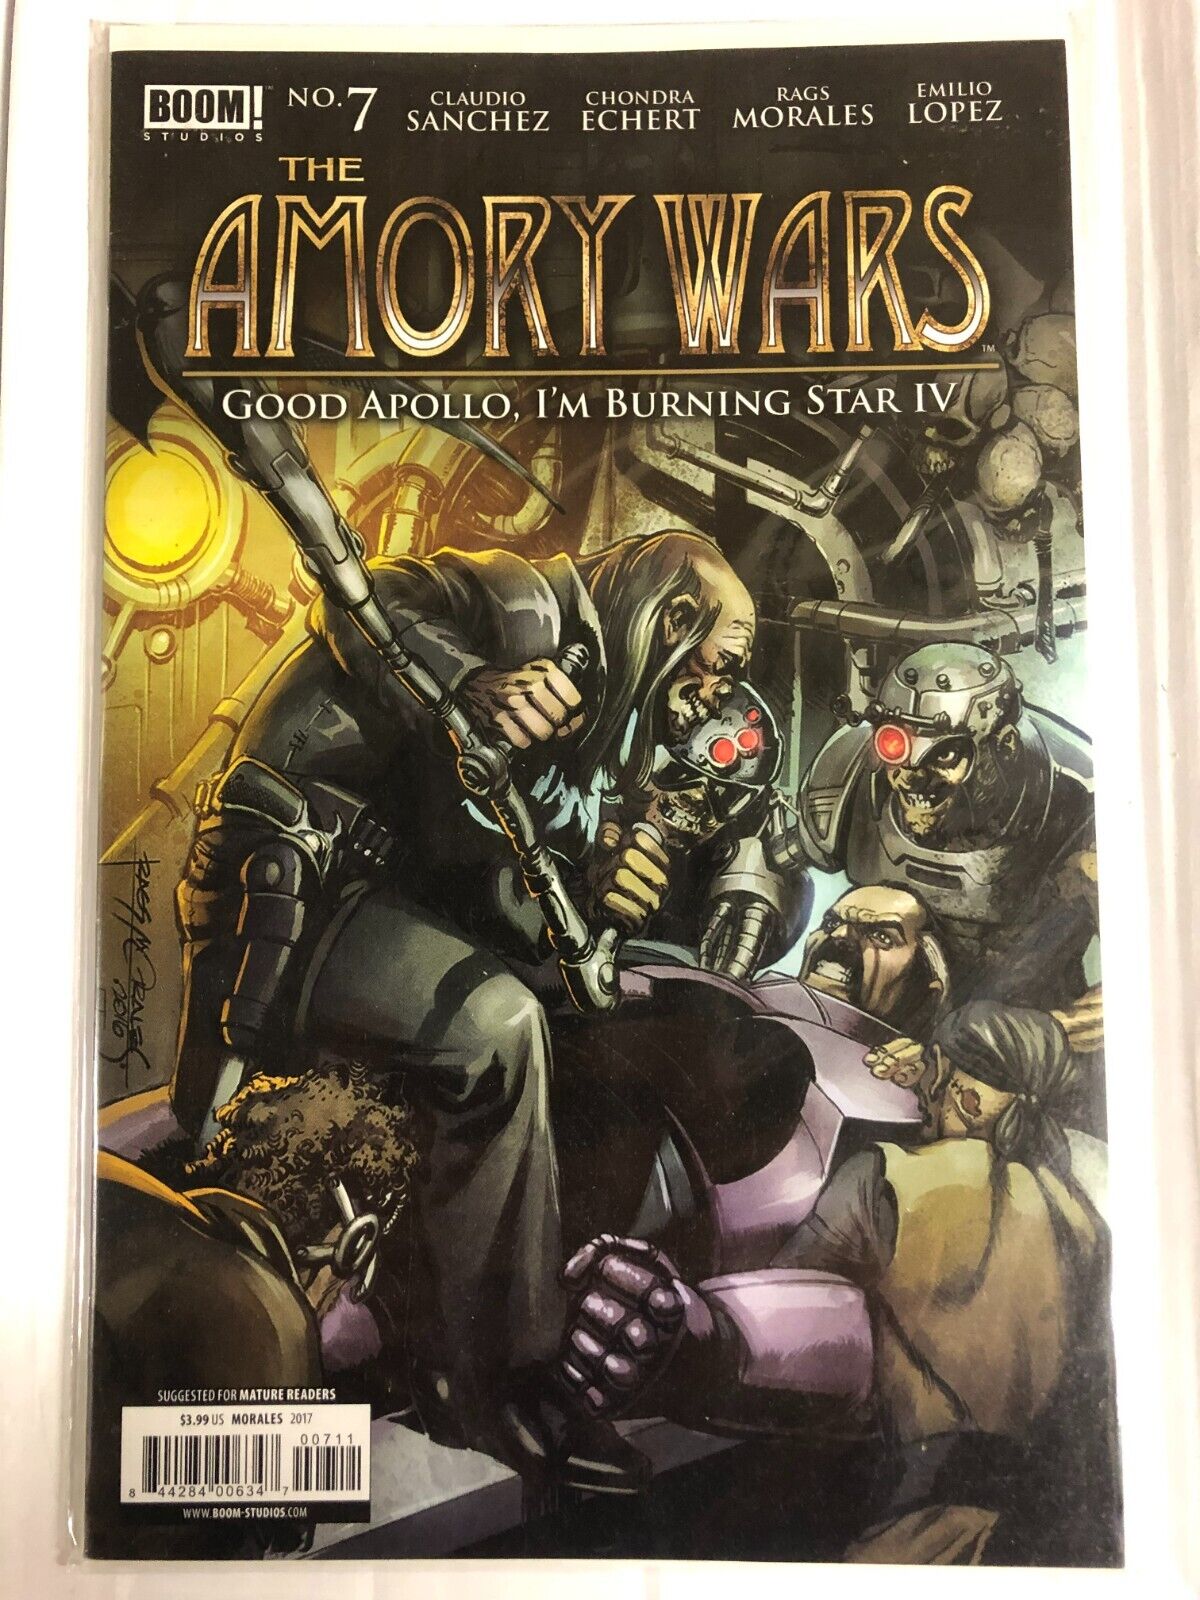 The Amory Wars - Good Apollo # 7 - Image Comics - Coheed & Cambria | eBay